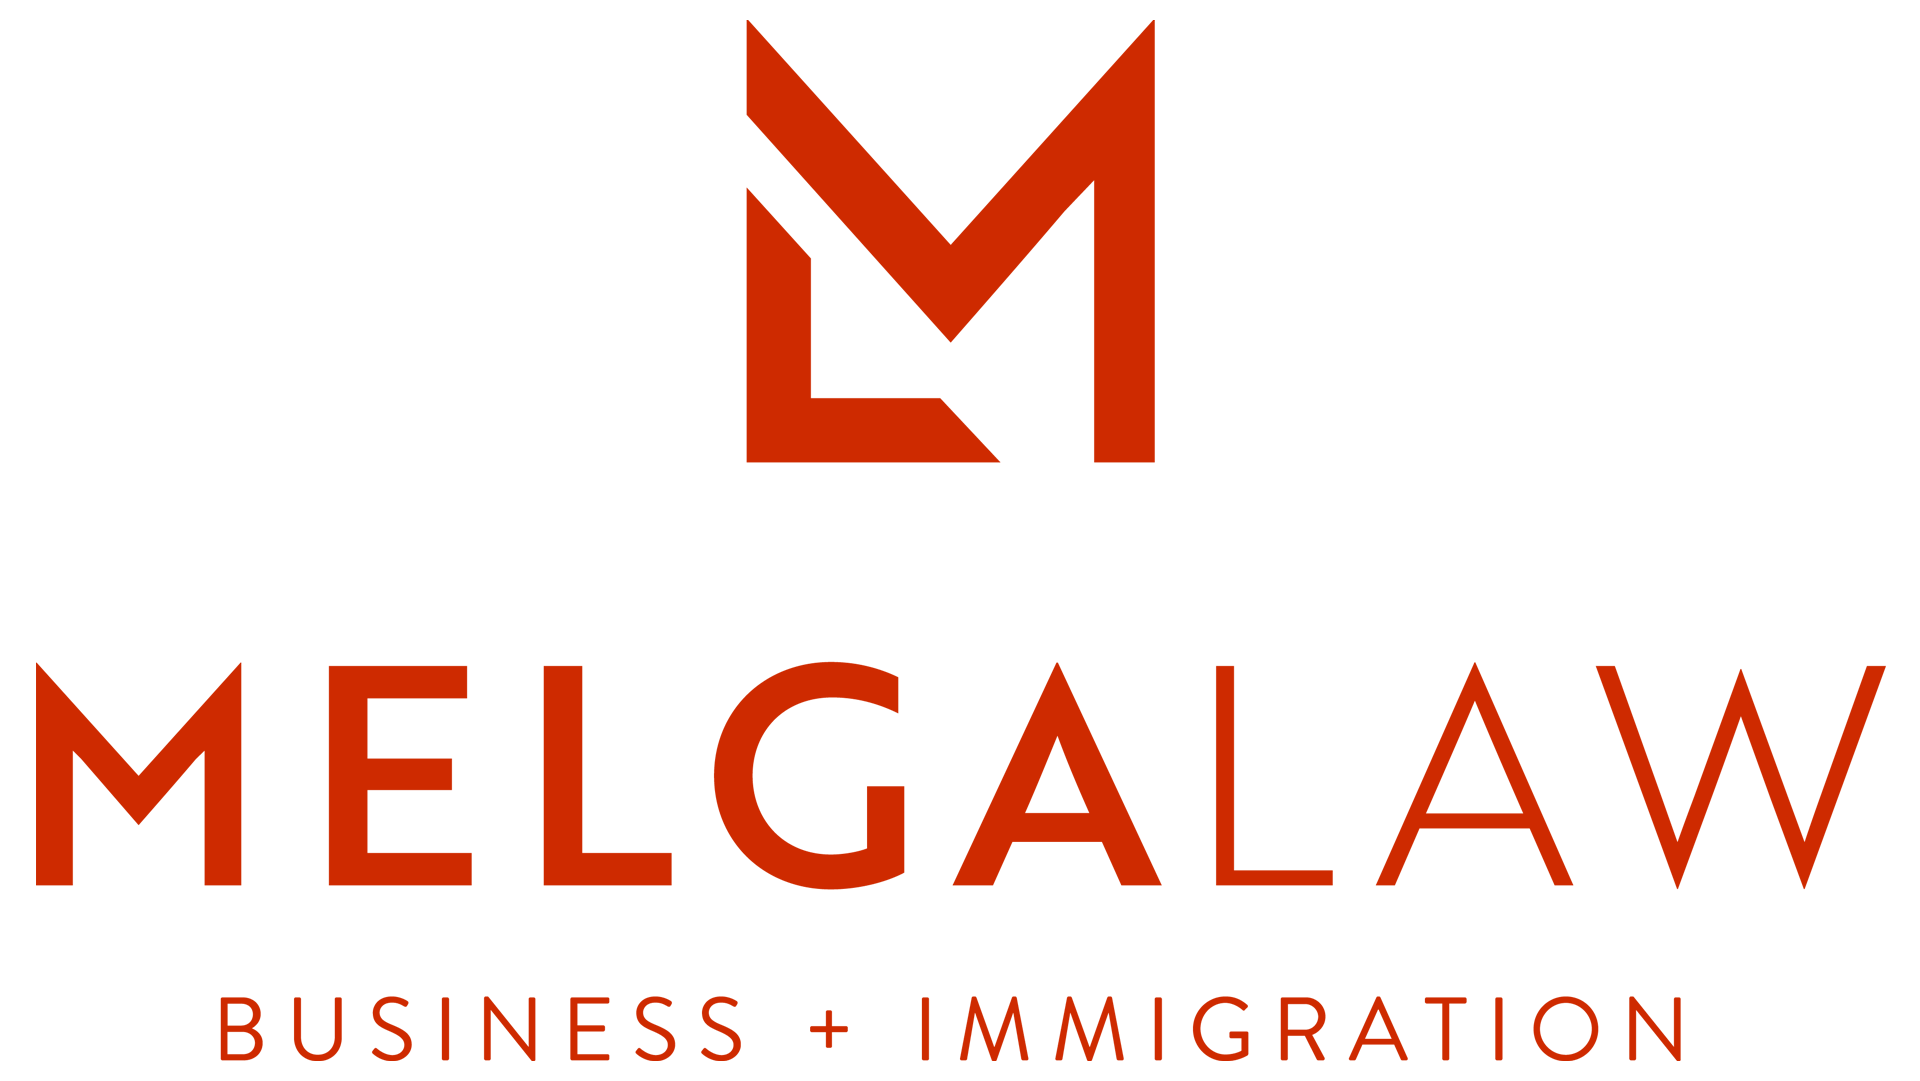 MelgaLaw